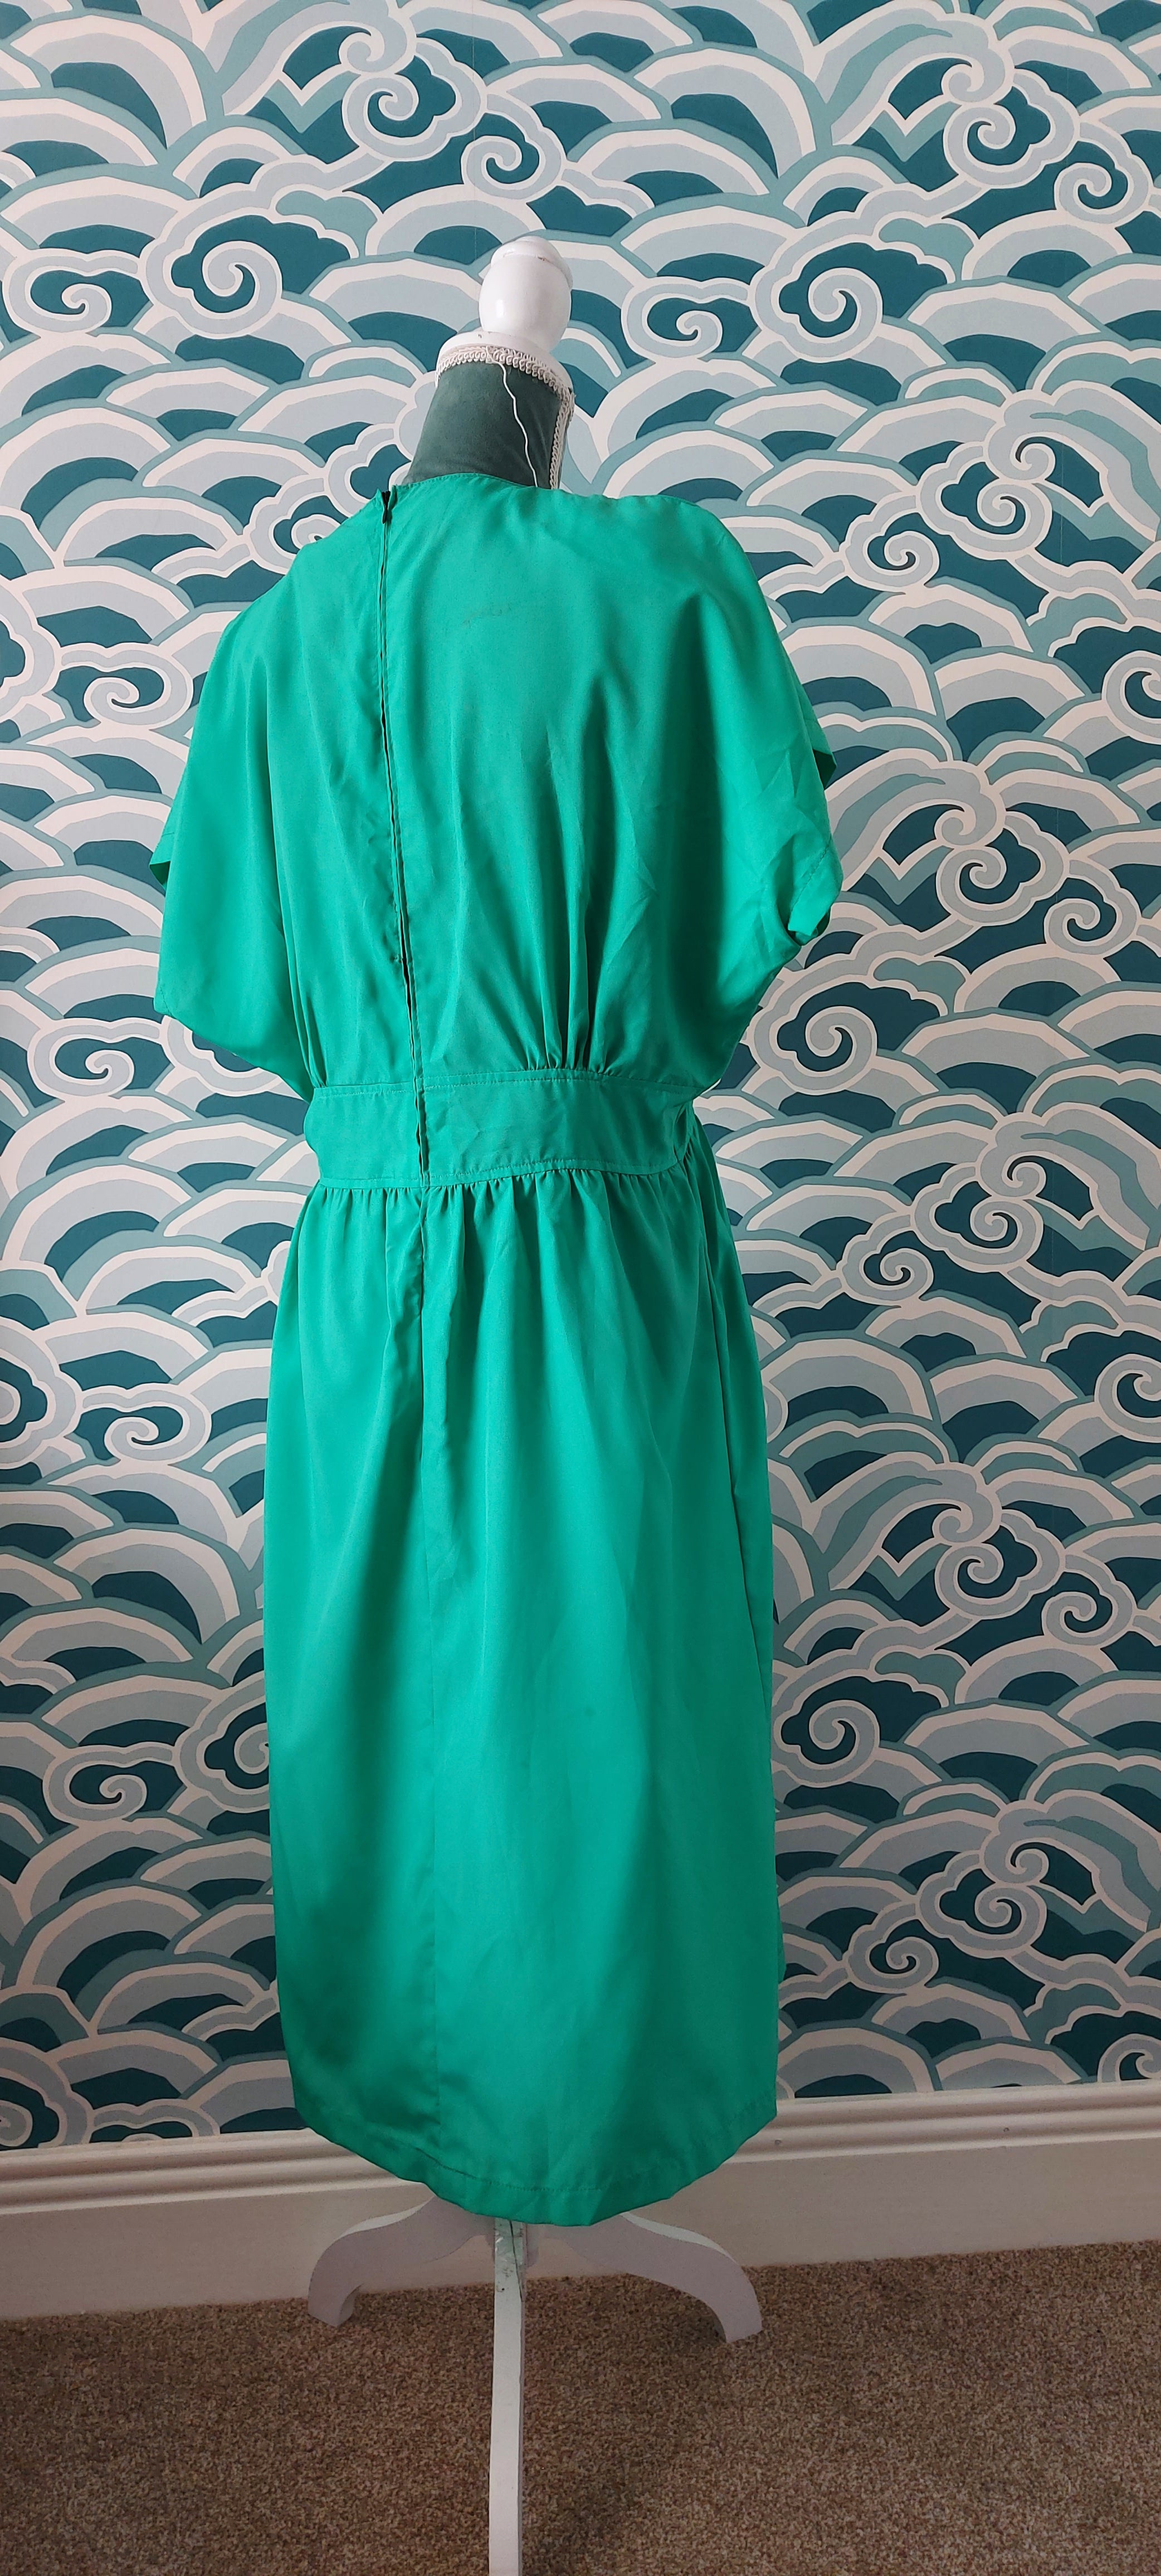 Green Dress with Sequin Motif